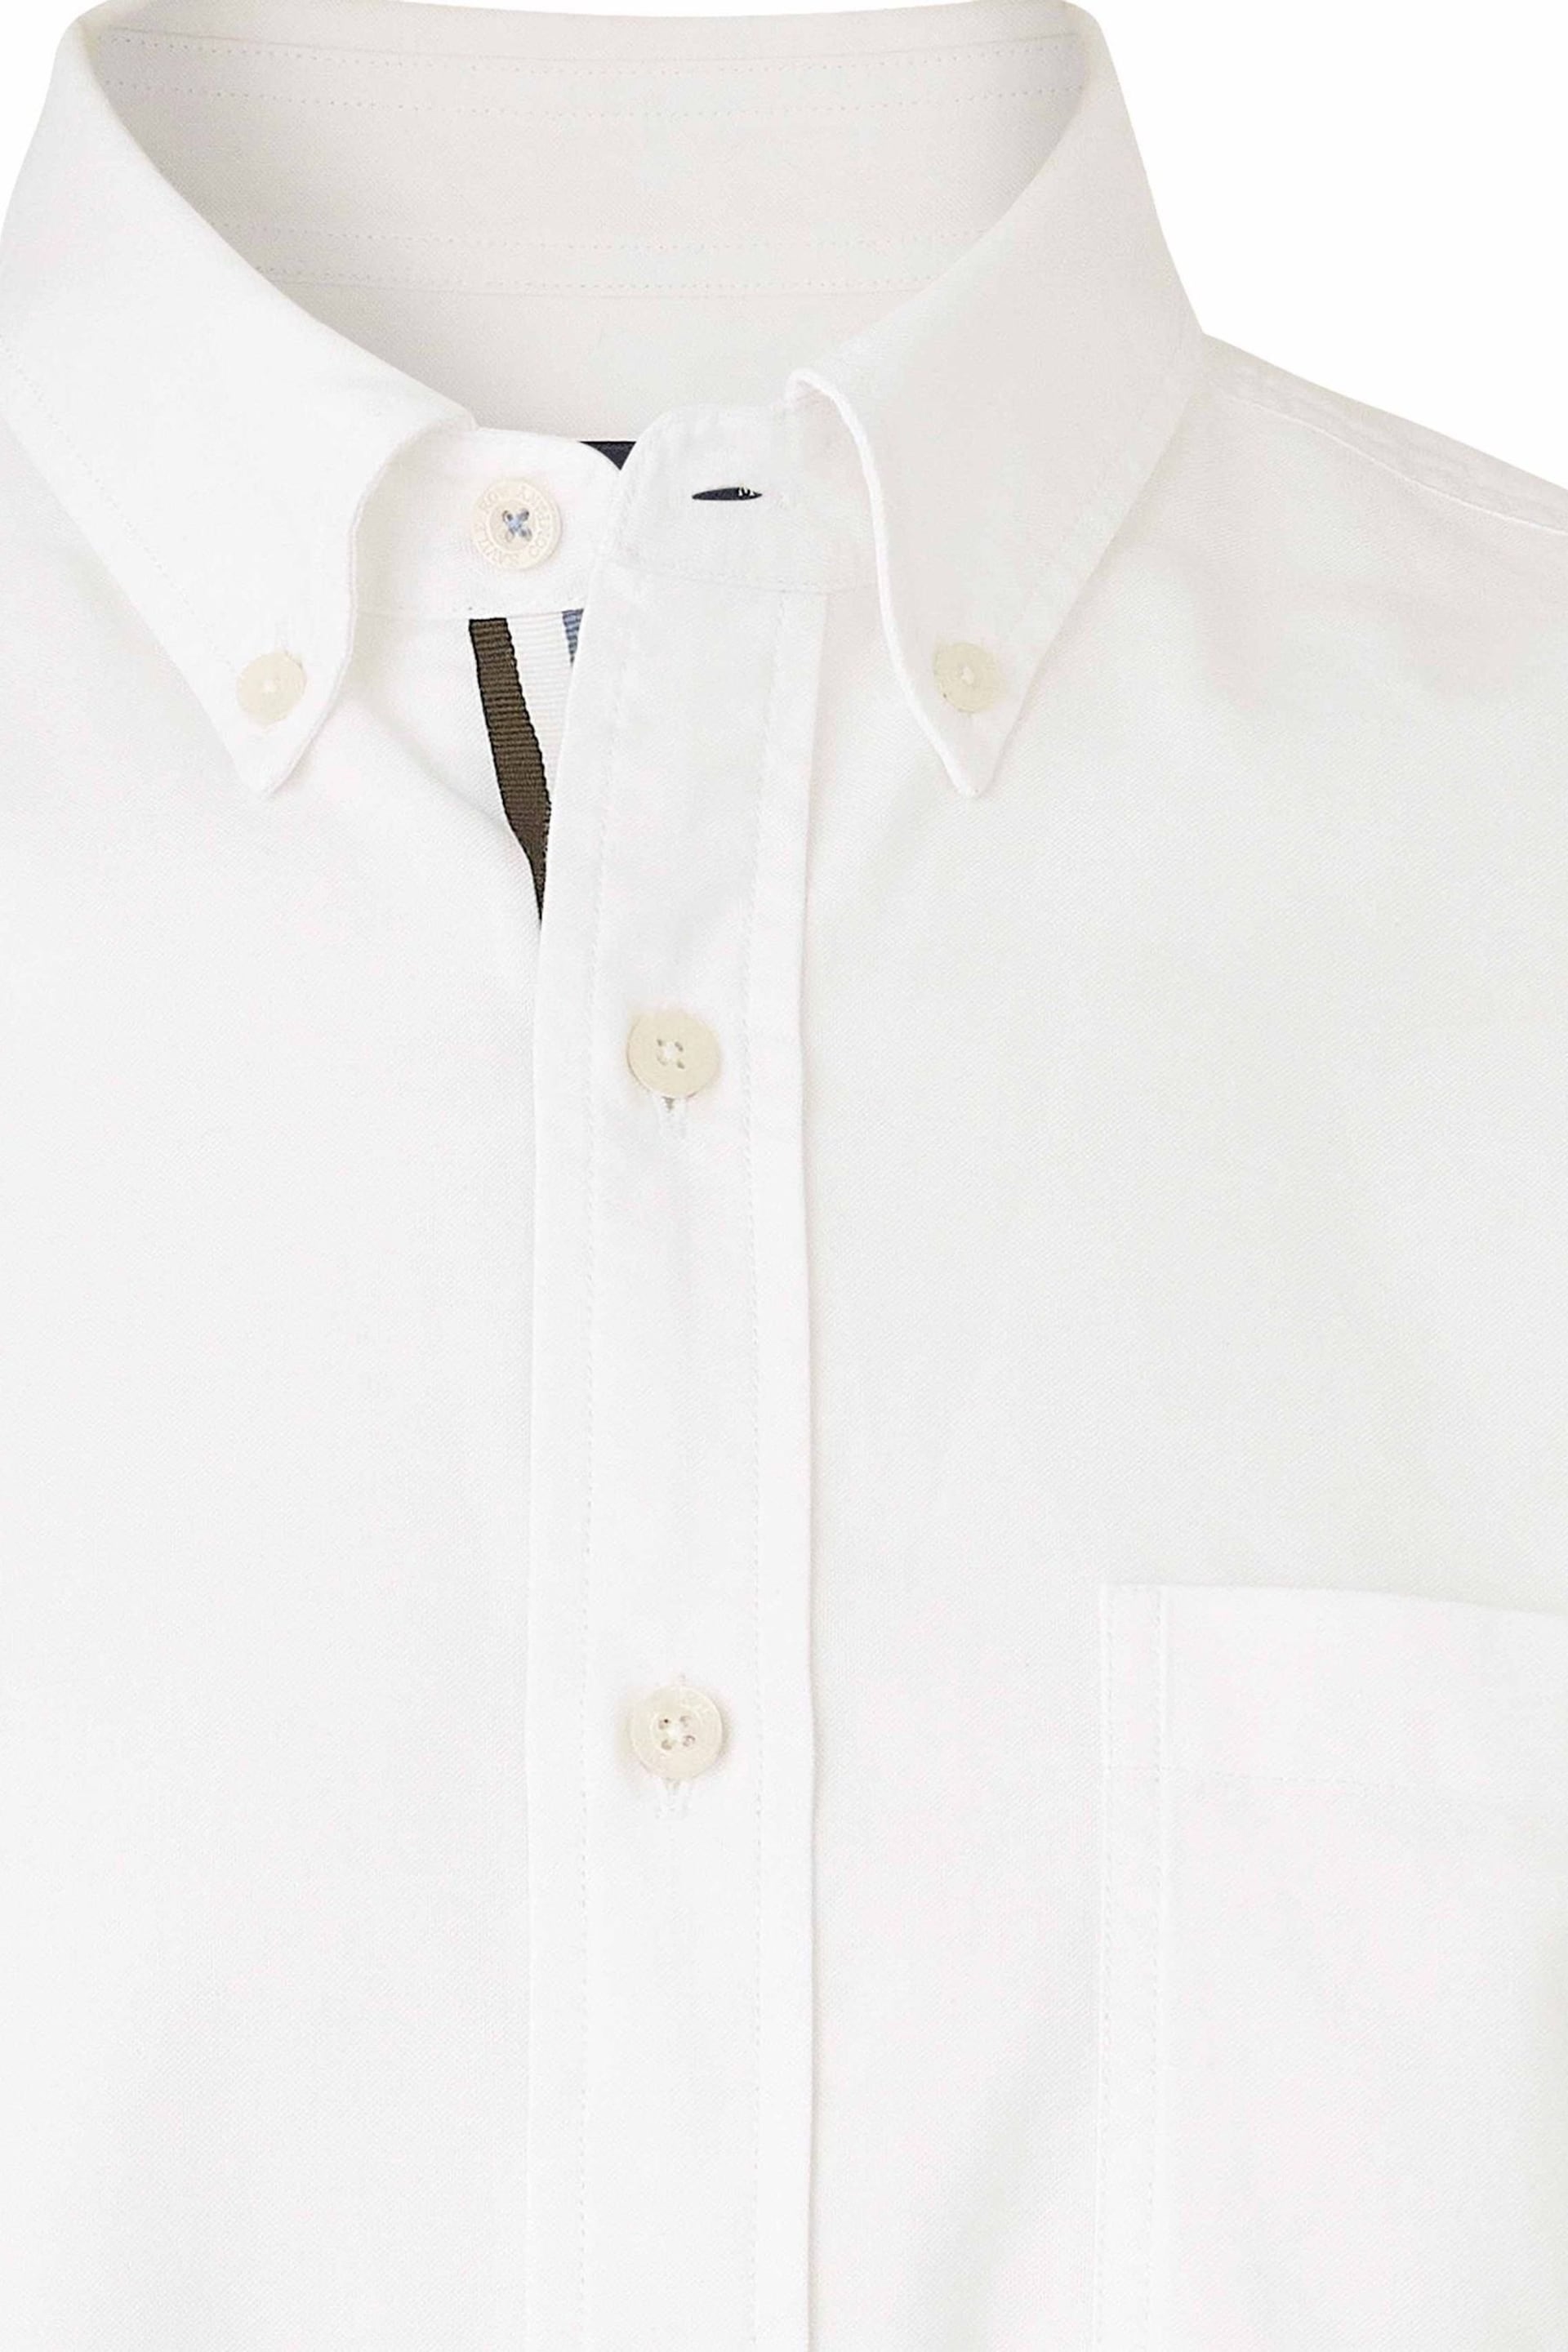 The Savile Row Company Stripe Placket Button Down Oxford White Shirt - Image 5 of 5